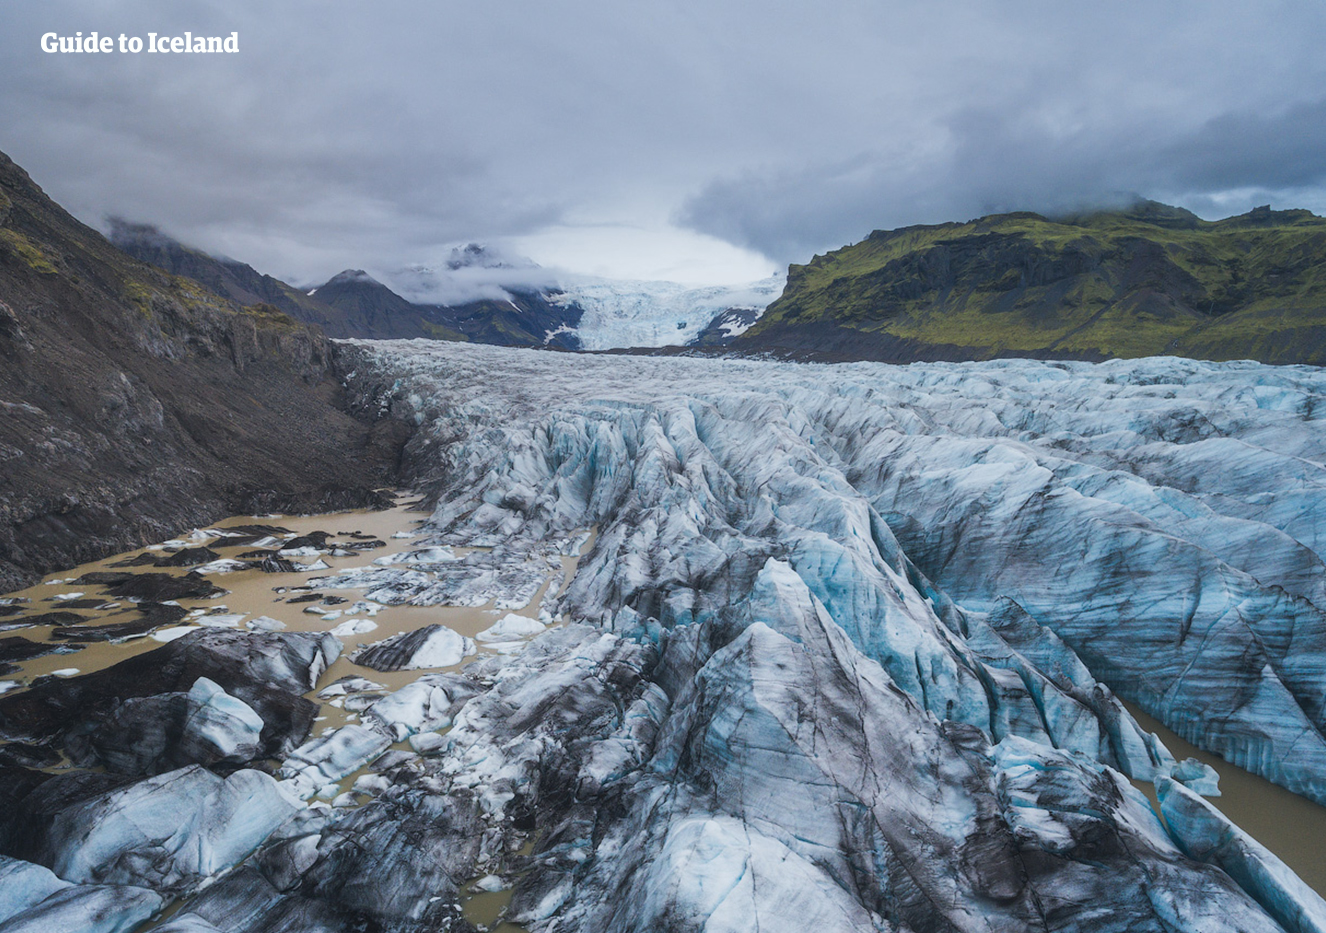 Ammira alcuni dei numerosi ghiacciai islandesi grazie a un tour self-drive estivo.